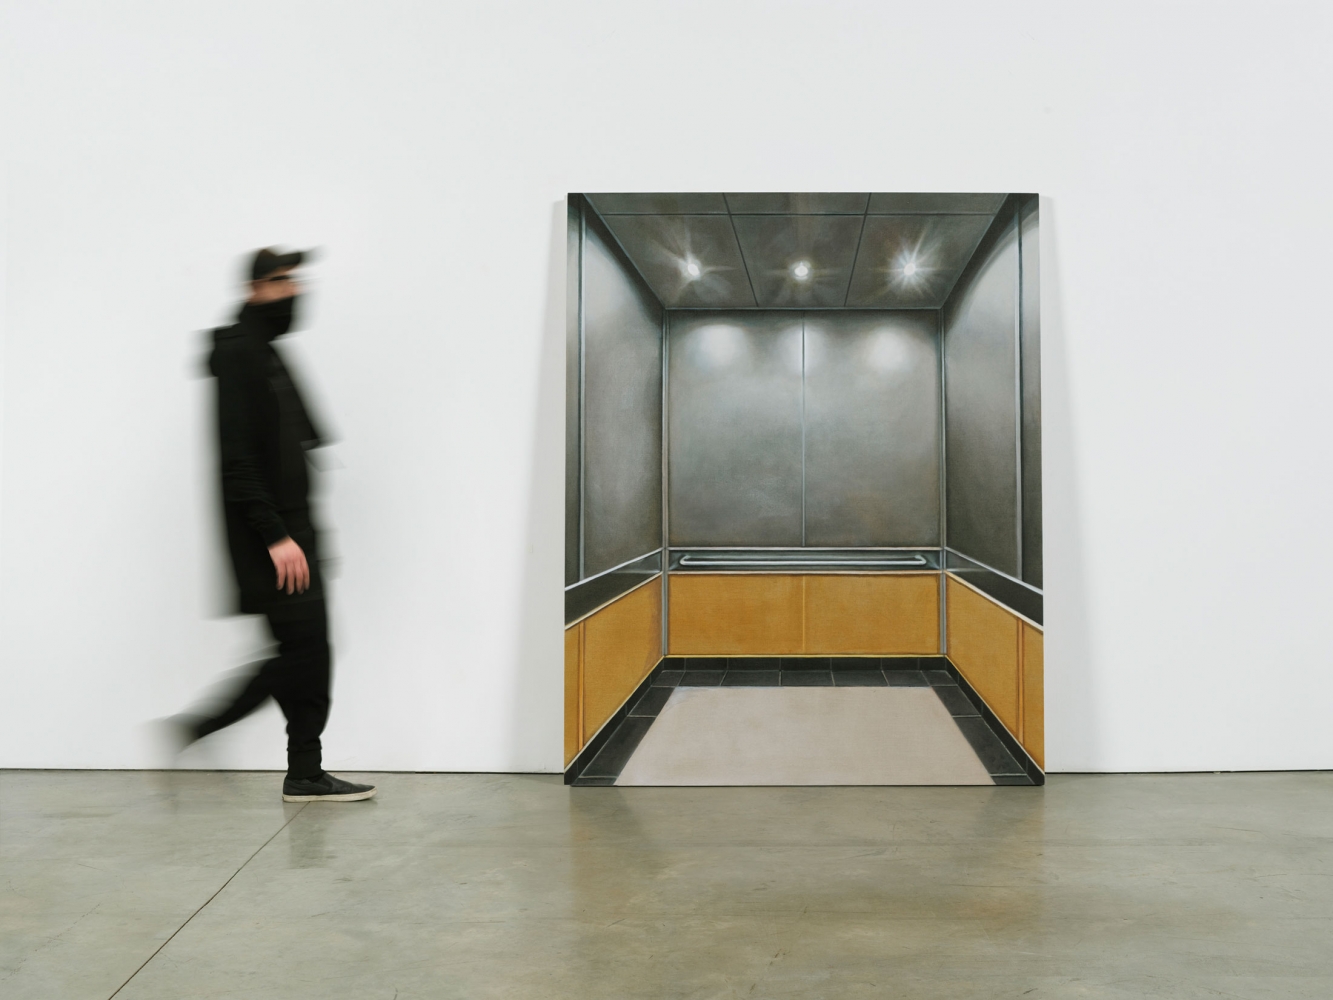 Allison Katz
Elevator I, 2020
Acrylic on linen
78 3/4 x 63 inches
(200 x 160 cm)